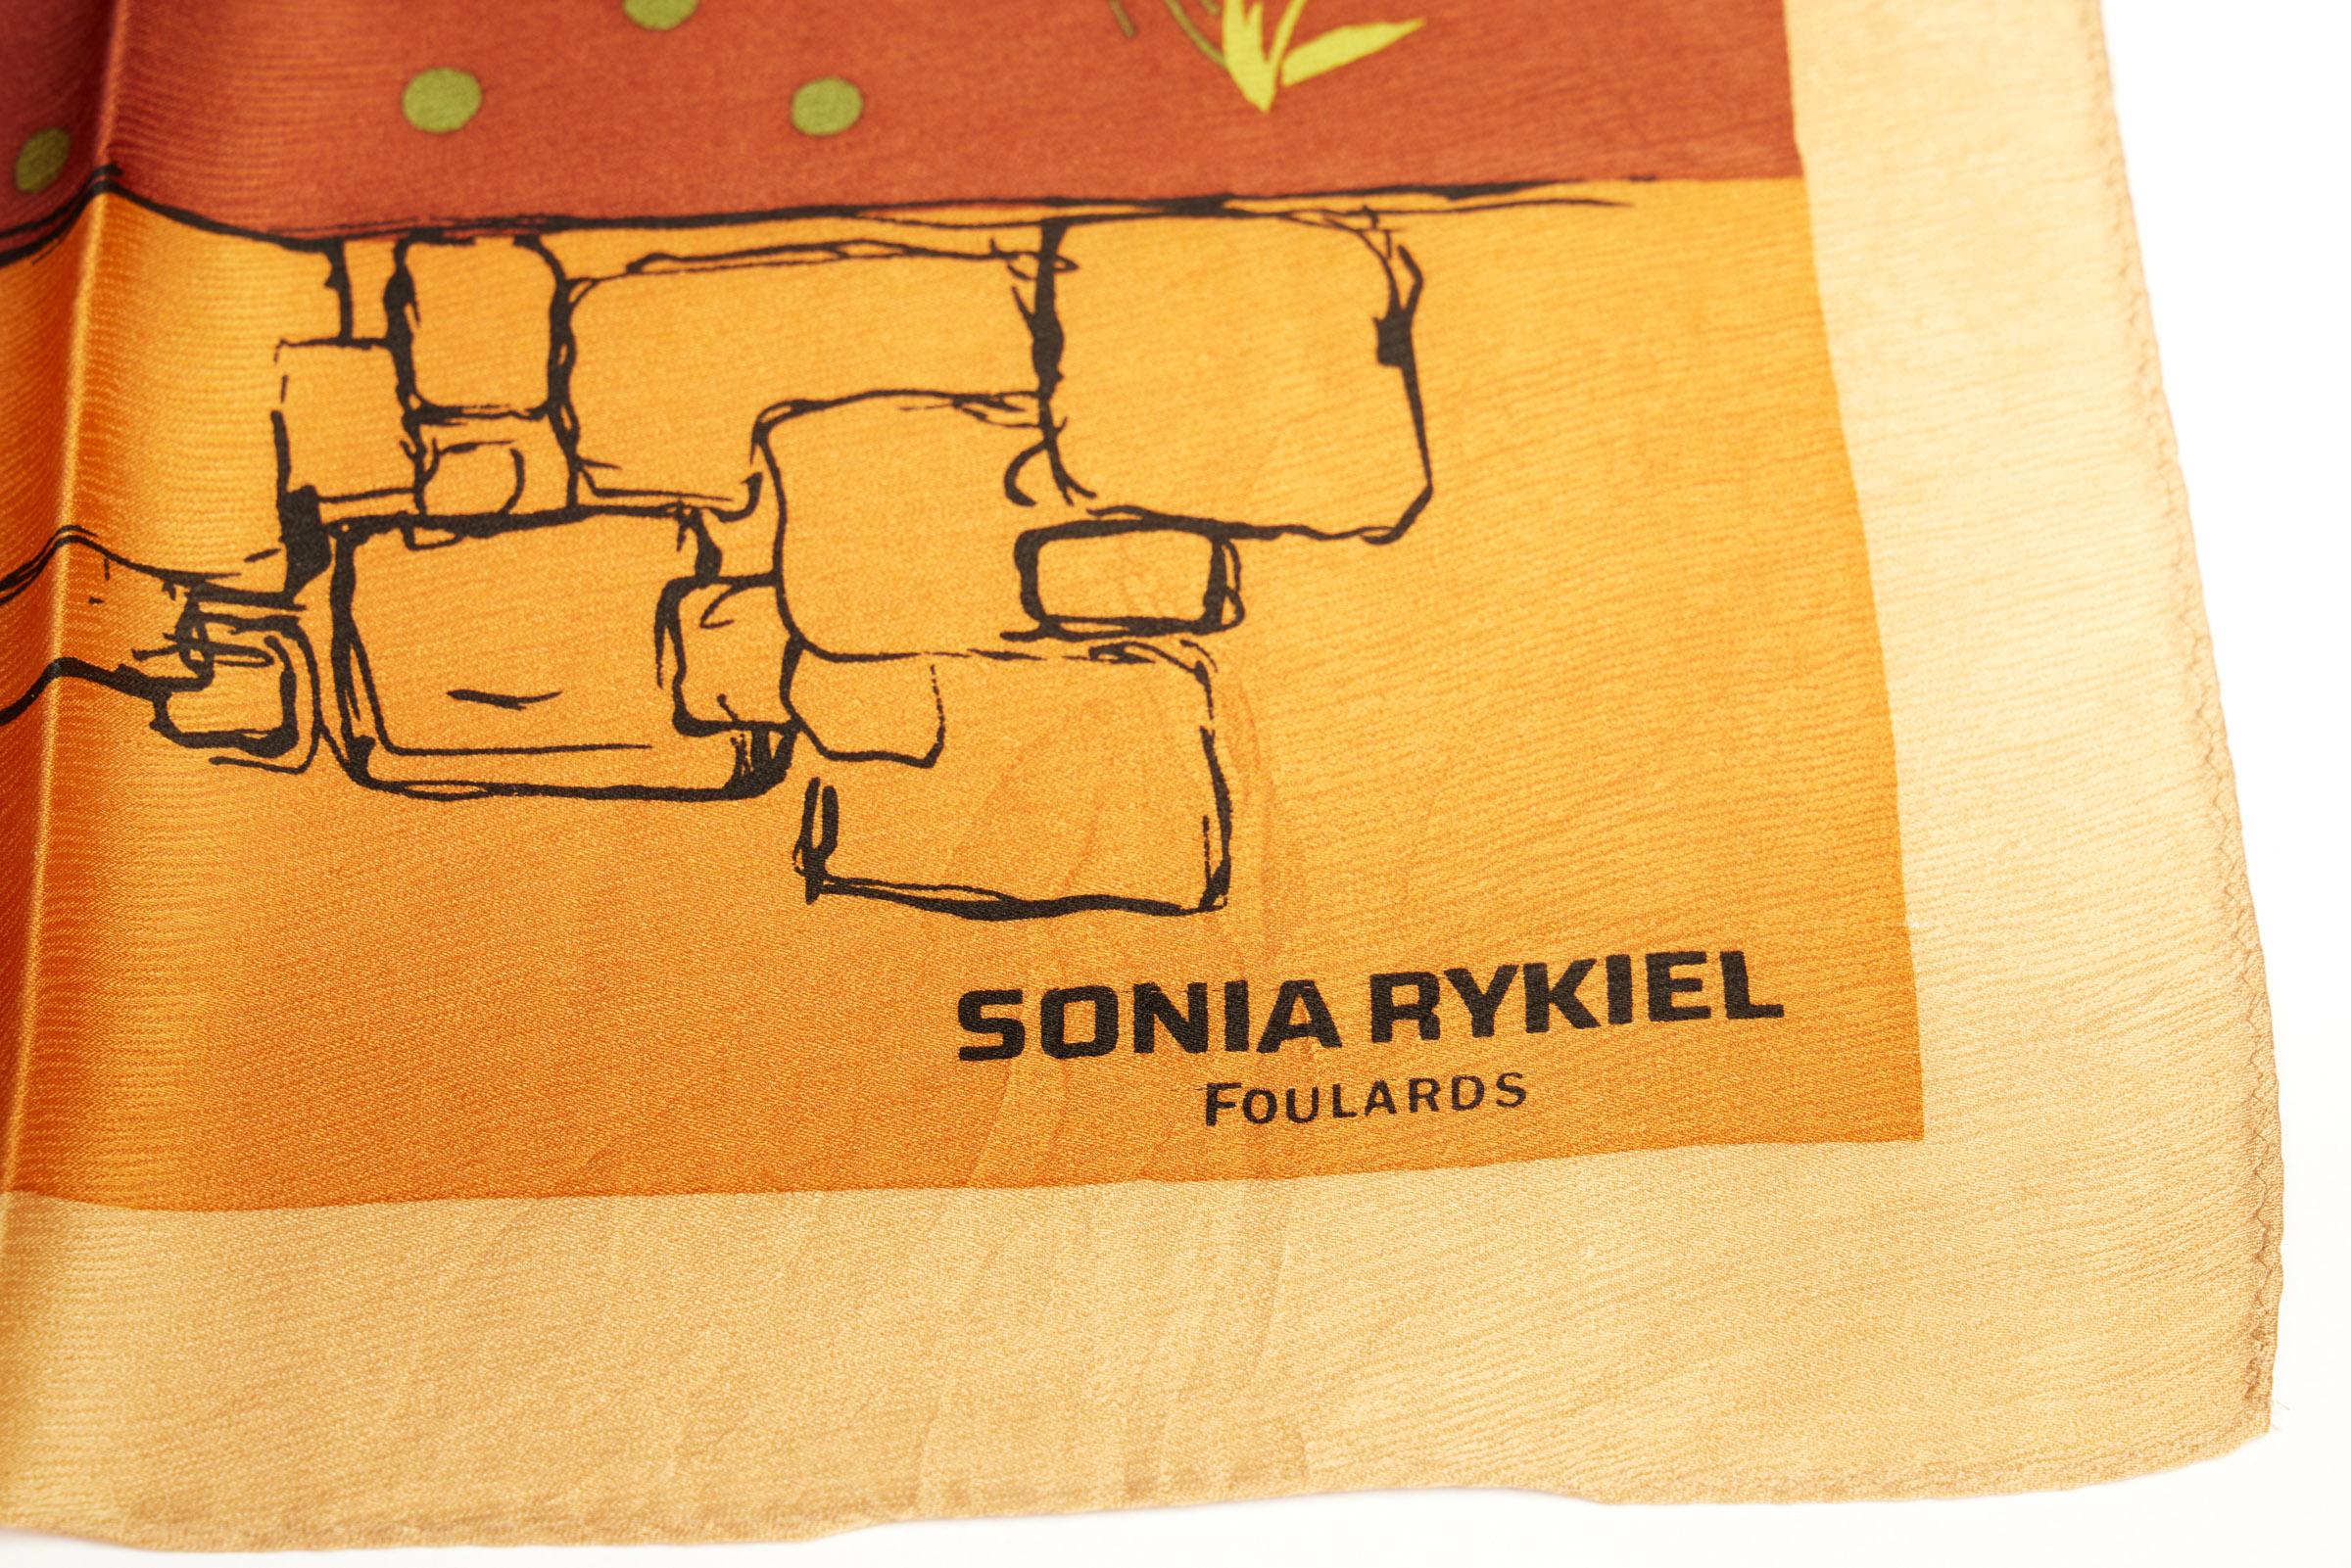 Sonia Rykiel Paris silk scarf with games design. Orange and green combination. Care tag.